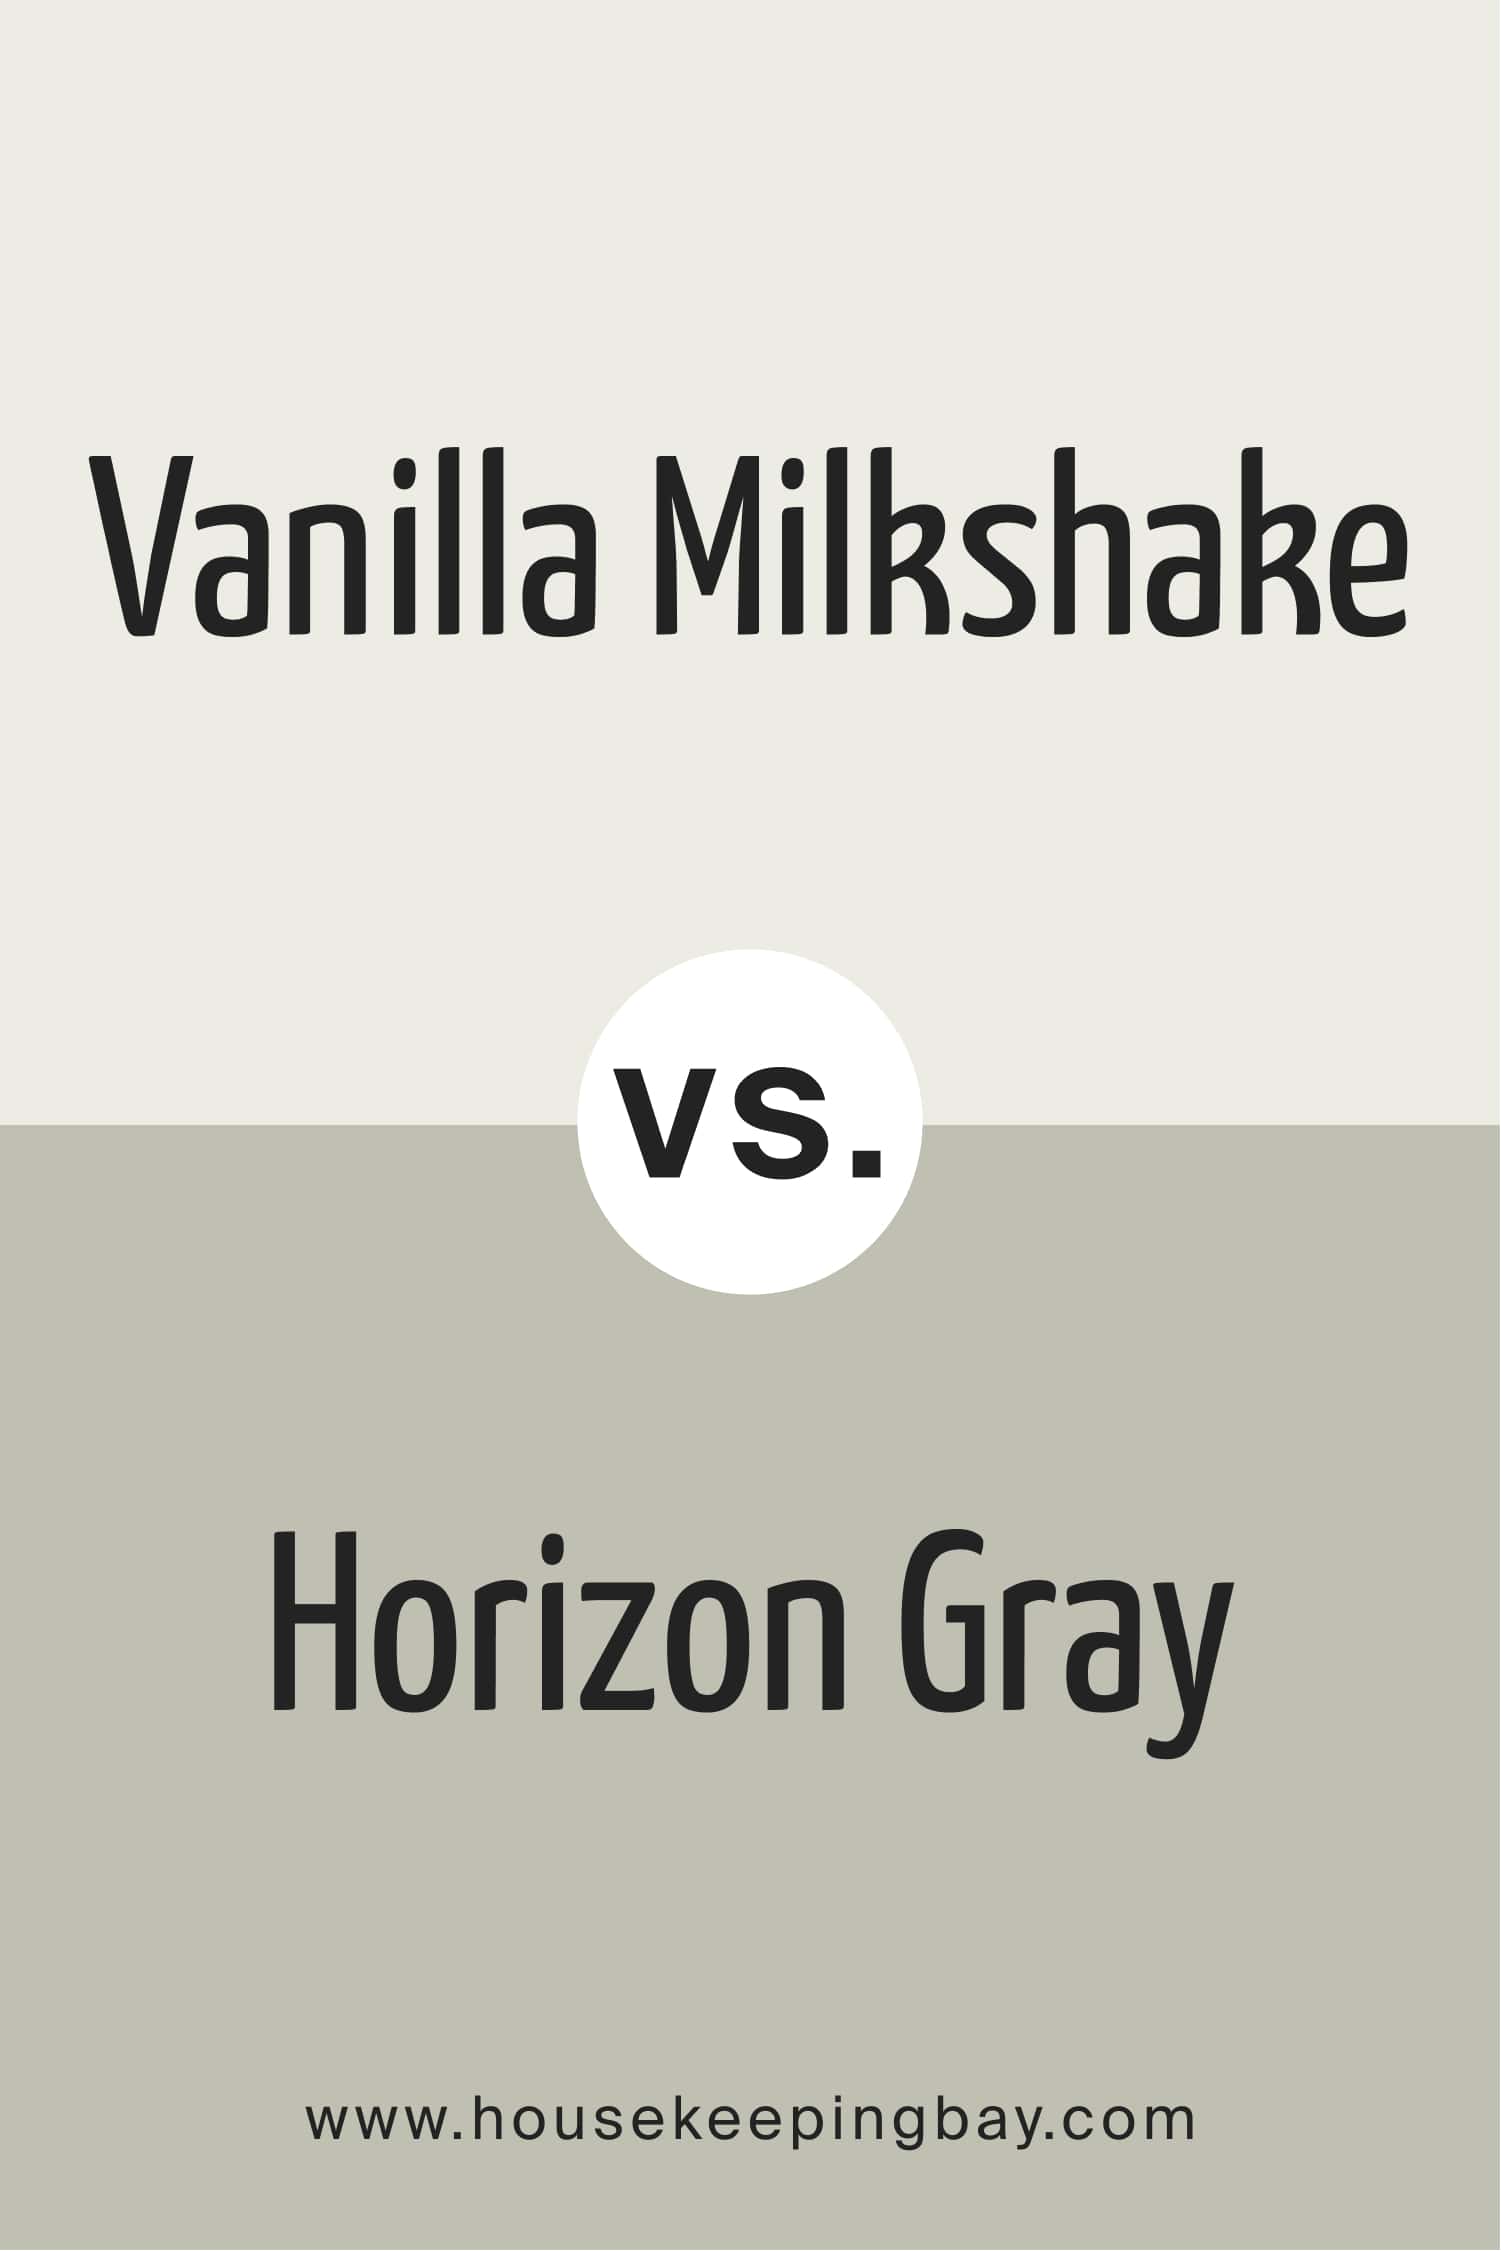 Vanilla Milkshake vs Horizon Gray